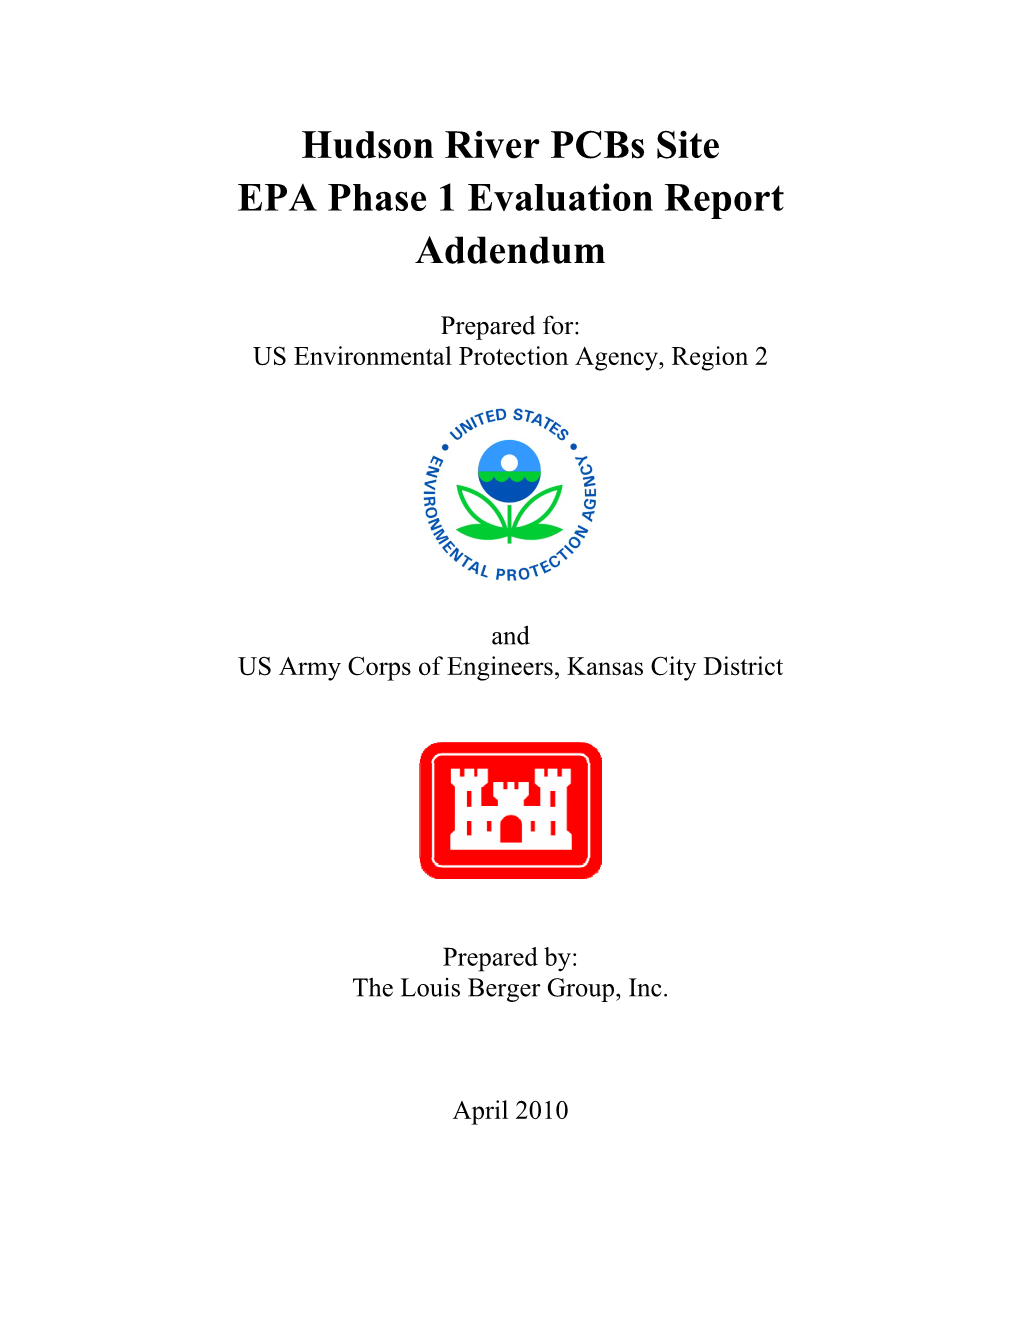 Hudson River Pcbs Site EPA Phase 1 Evaluation Report Addendum